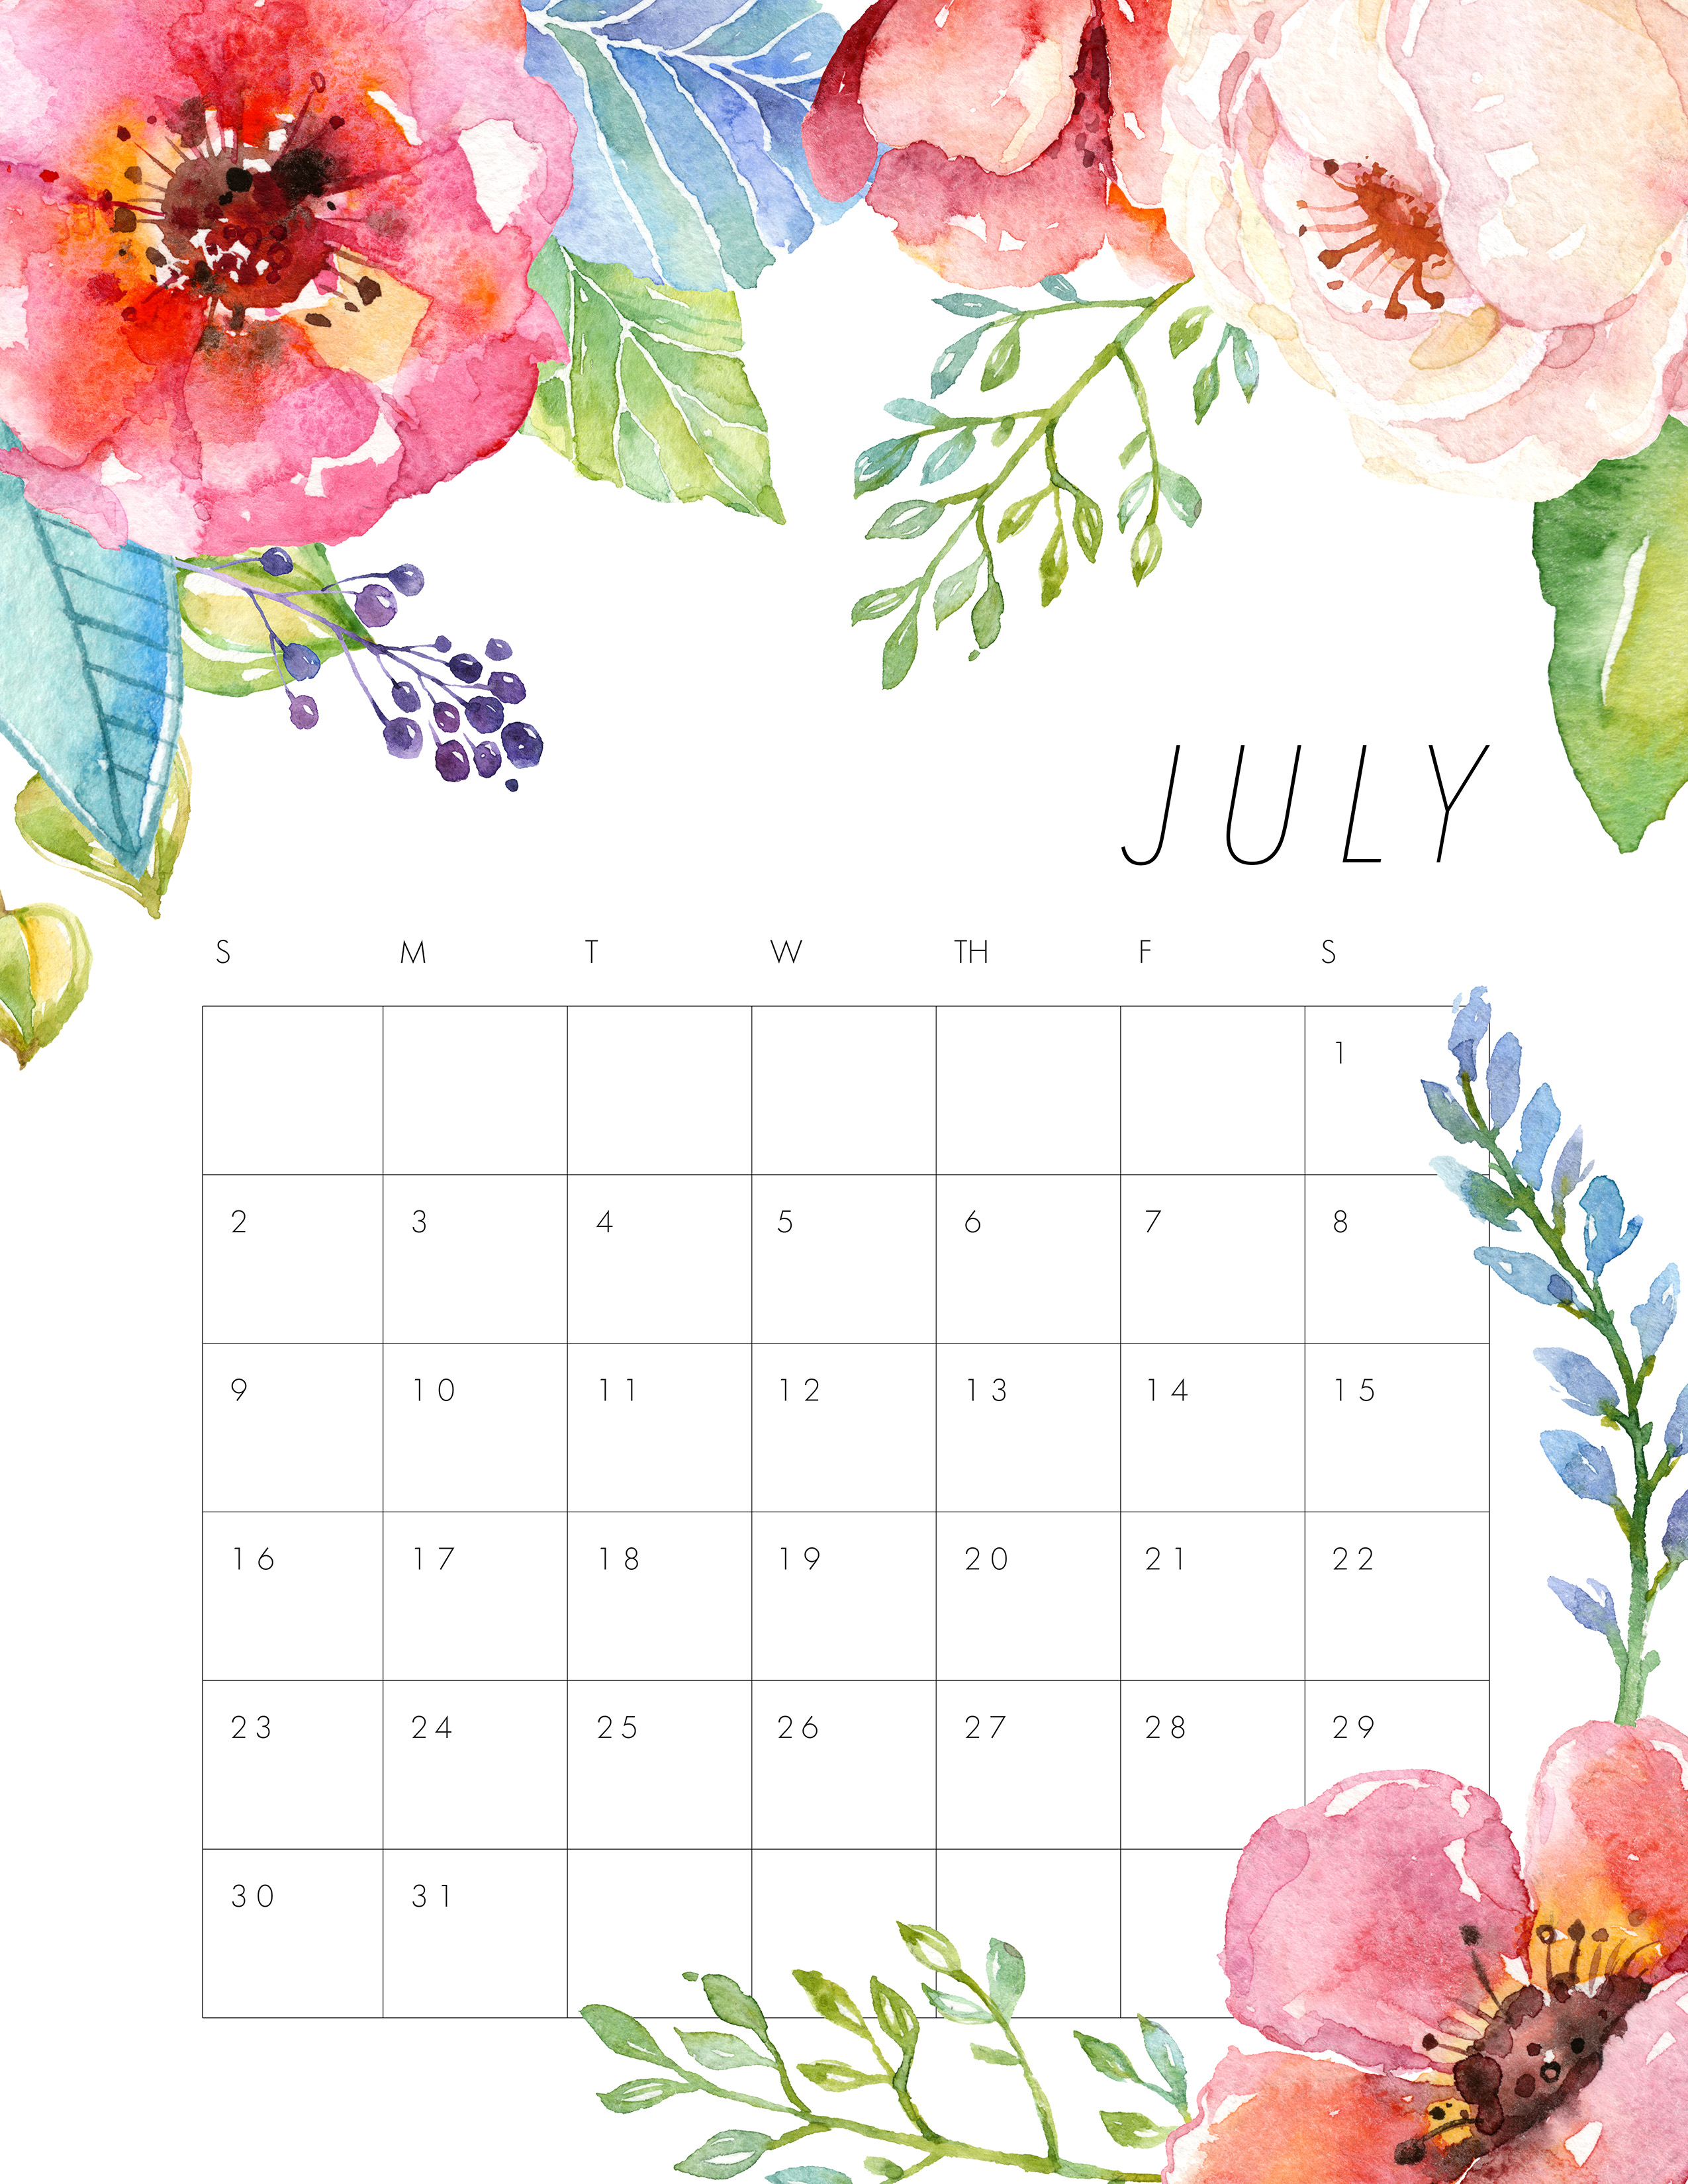 tcm-2017-7-july-jpg-2550-3300-july-calendar-calendar-printables-floral-printables